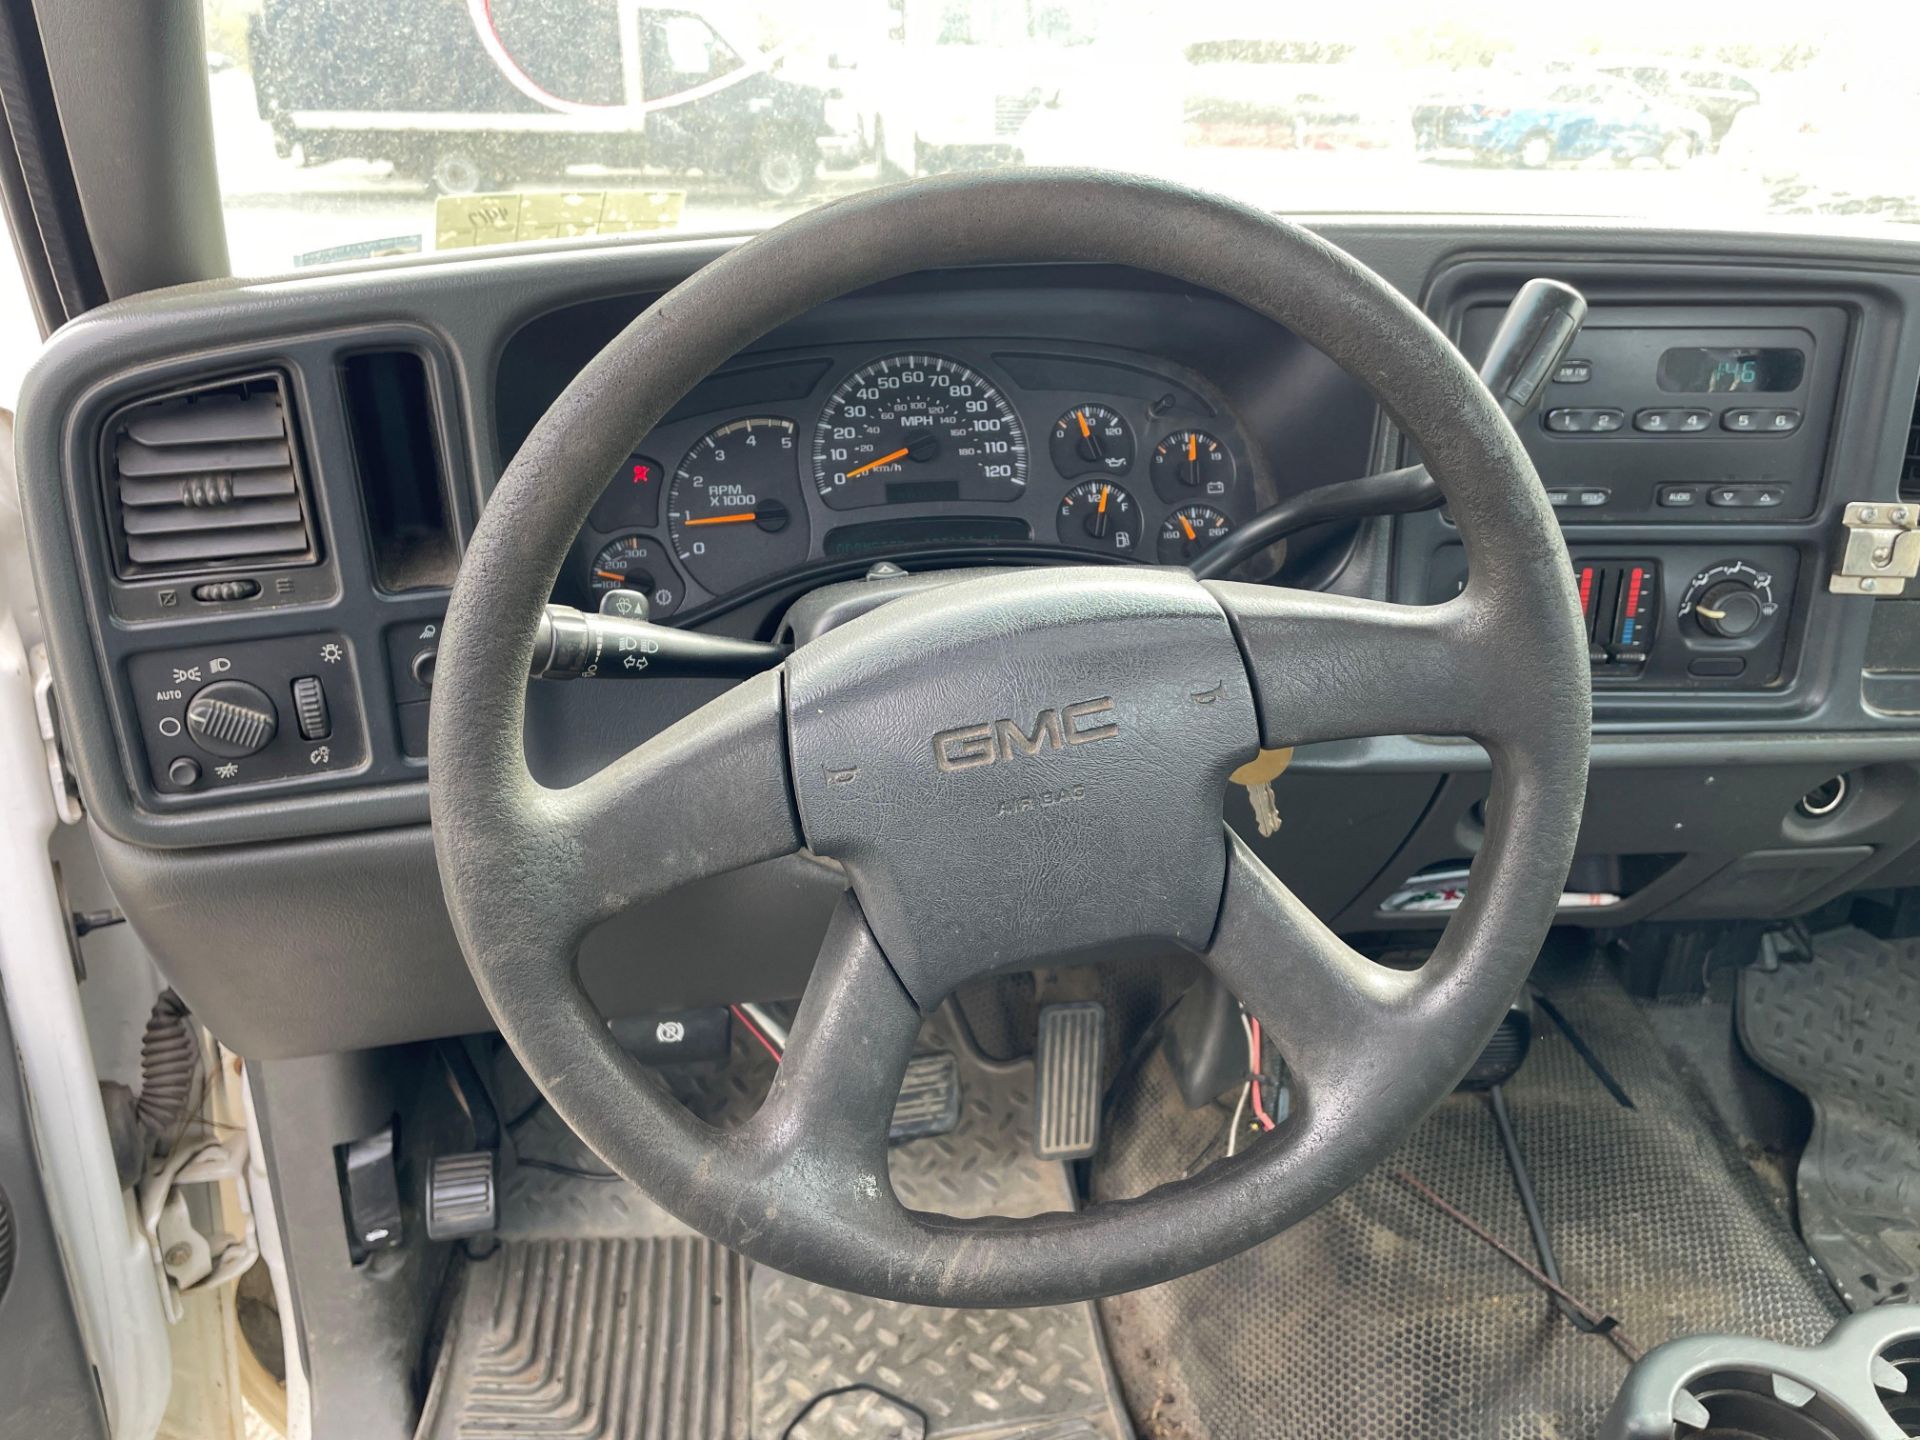 2005 GMC 2500 Pickup Truck - Image 8 of 23